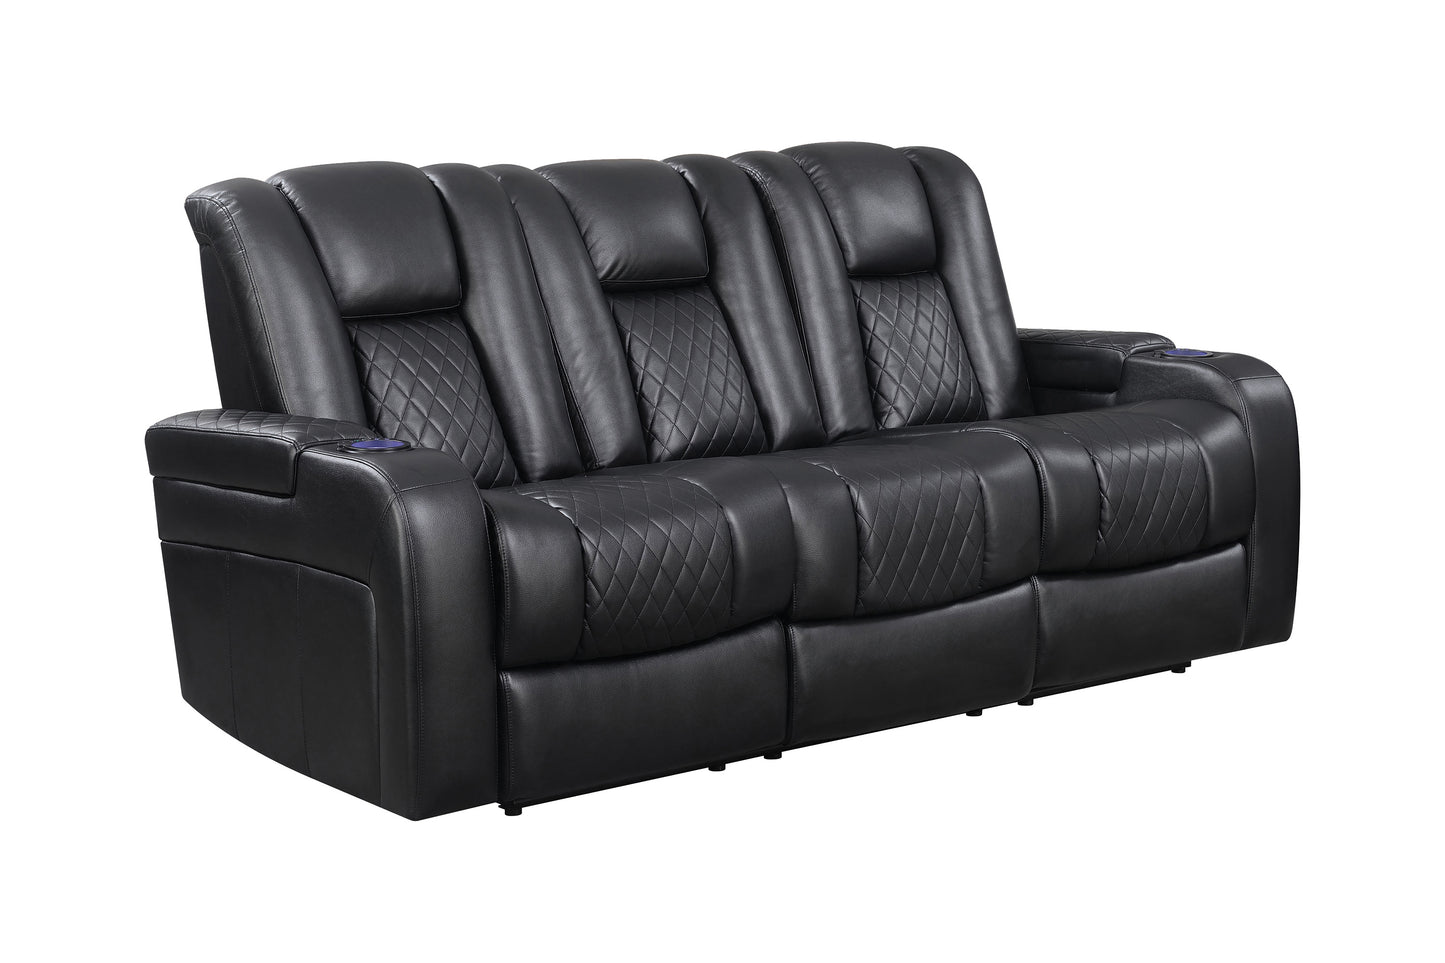 Delangelo Upholstered Tufted Living Room Set - 602301P